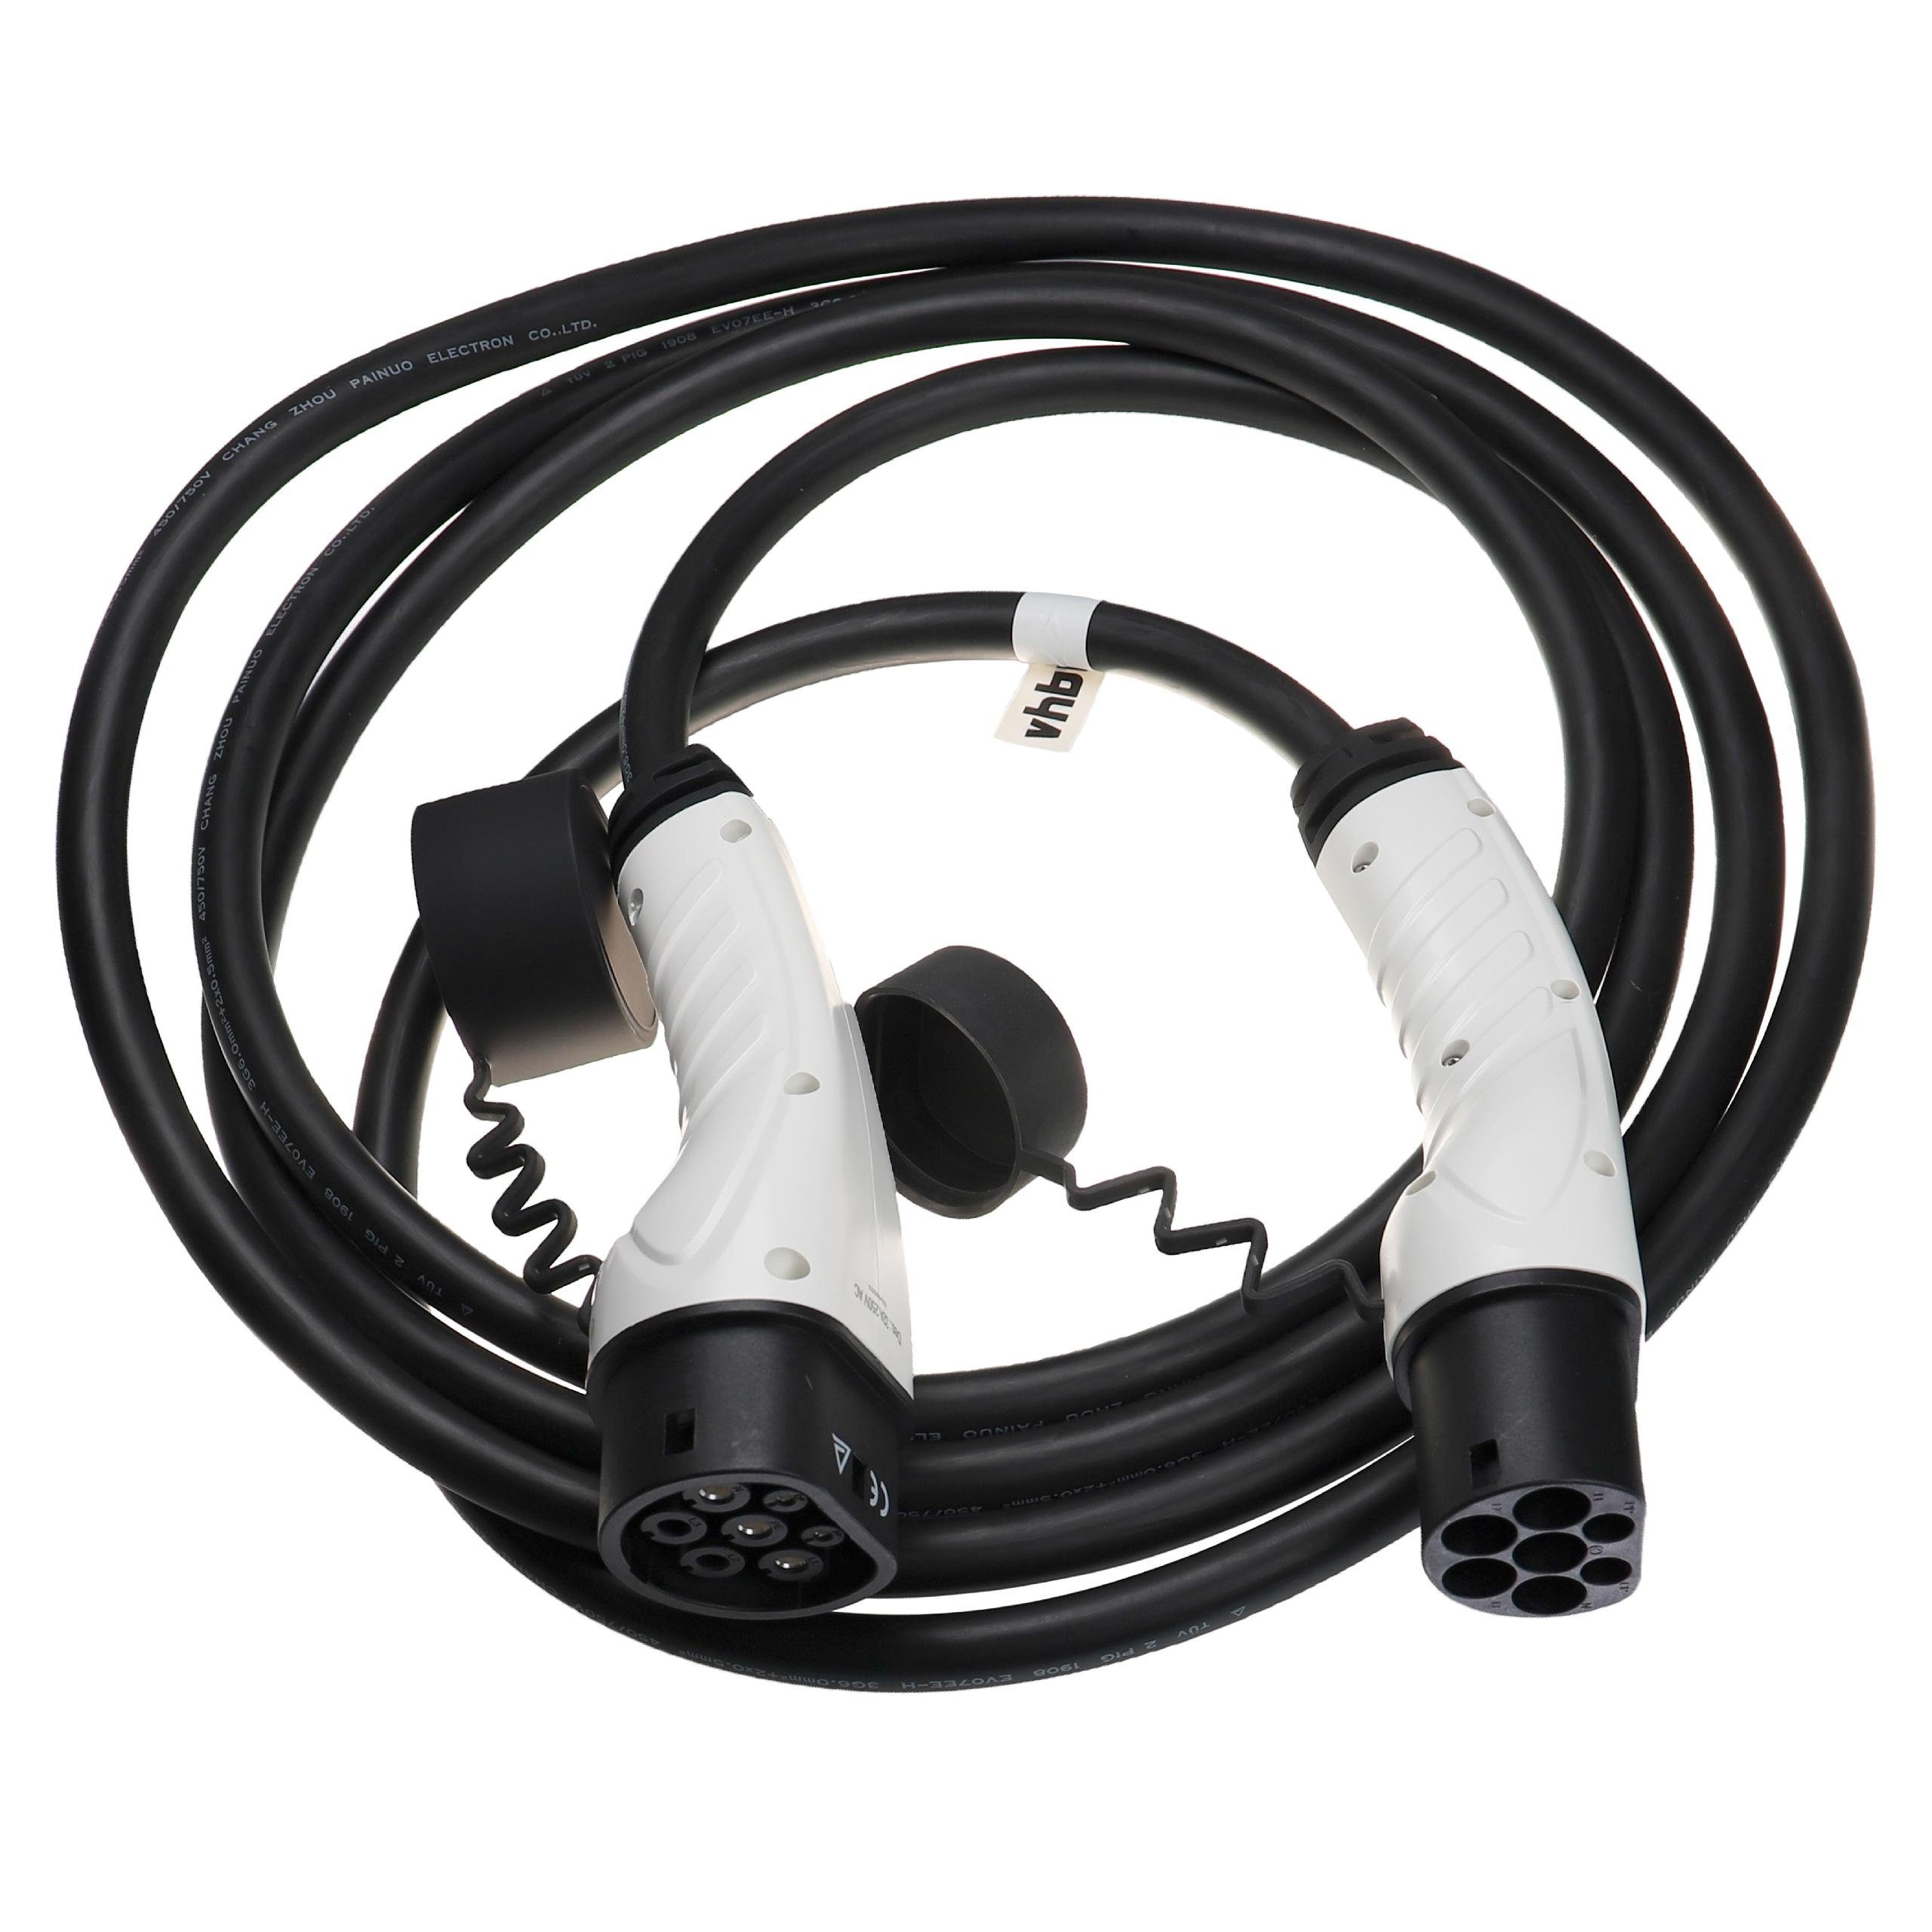 Tucson Elektroauto Elektro-Kabel vhbw passend / Ladekabel für PHEV Hyundai Plug-in-Hybrid